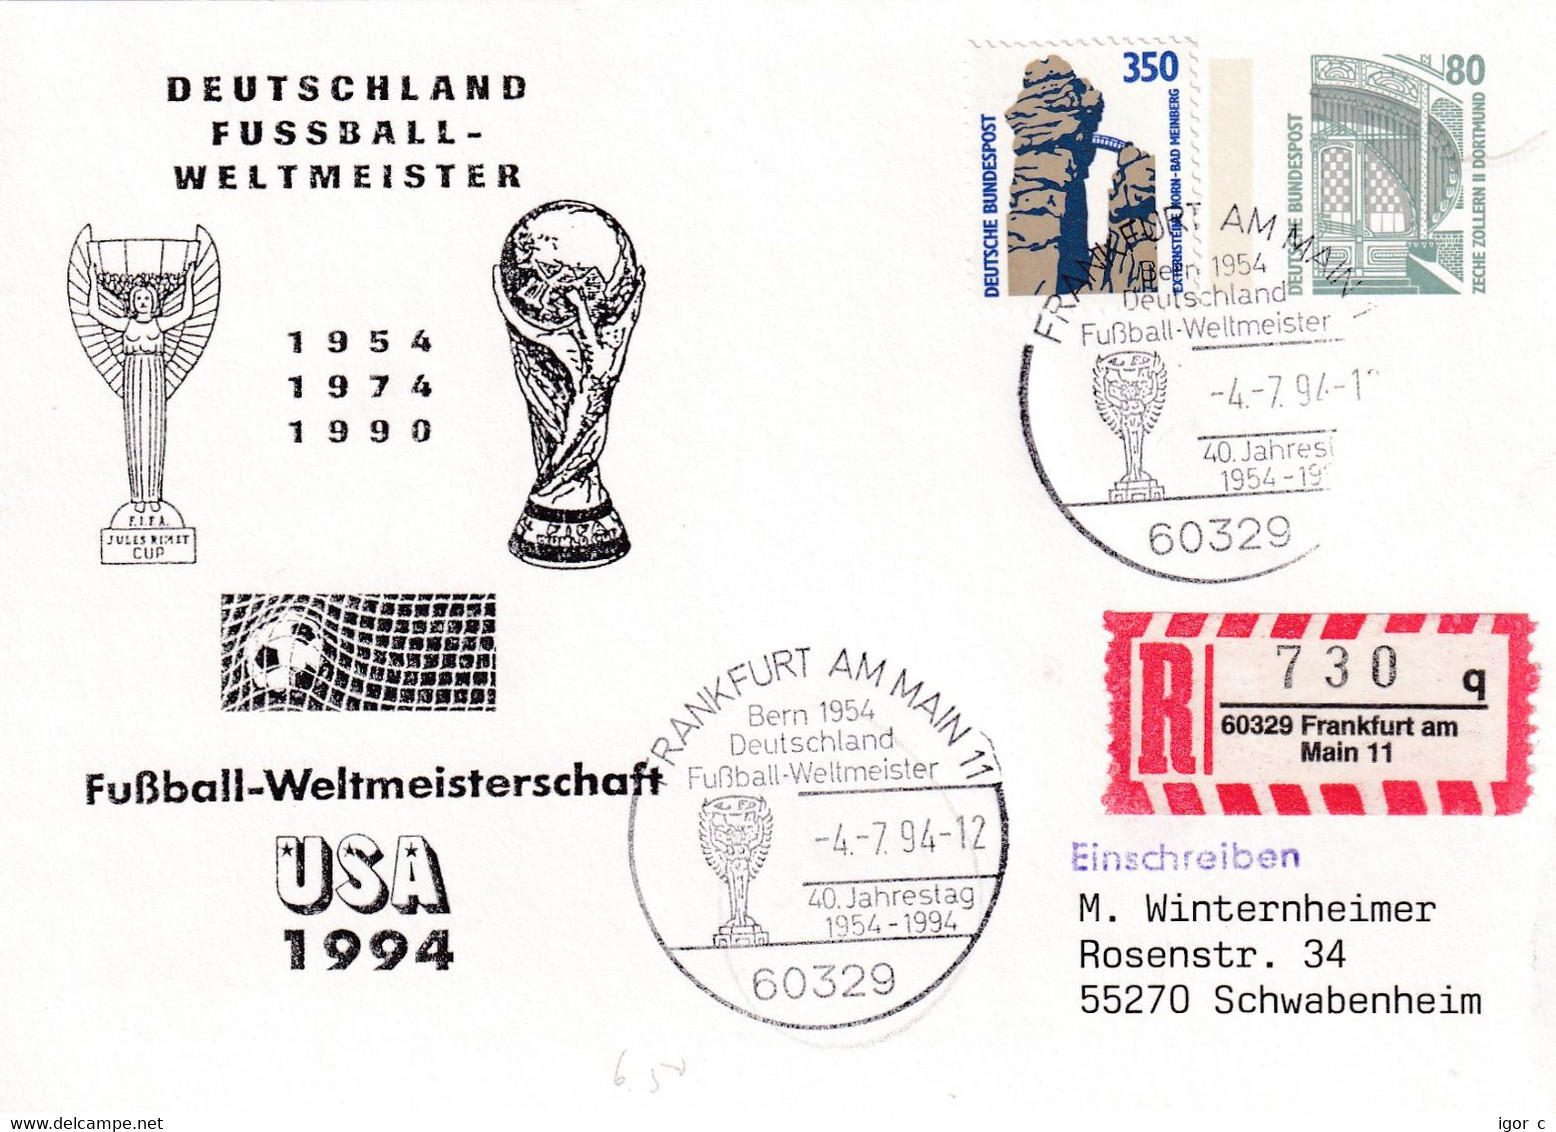 USA 1994 Registered Postal Stationery Card: Football Soccer Calcio Fussball; FIFA World Cup USA; Wunder Von Bern - 1954 – Zwitserland